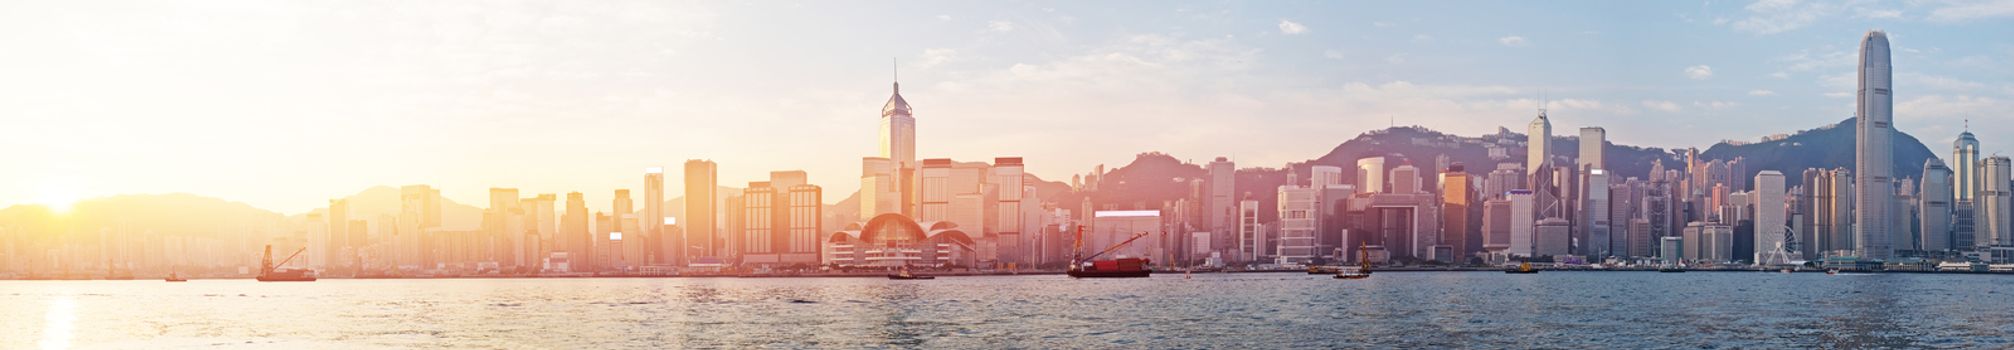 Hongkong Skyline in sunrise View Panorama